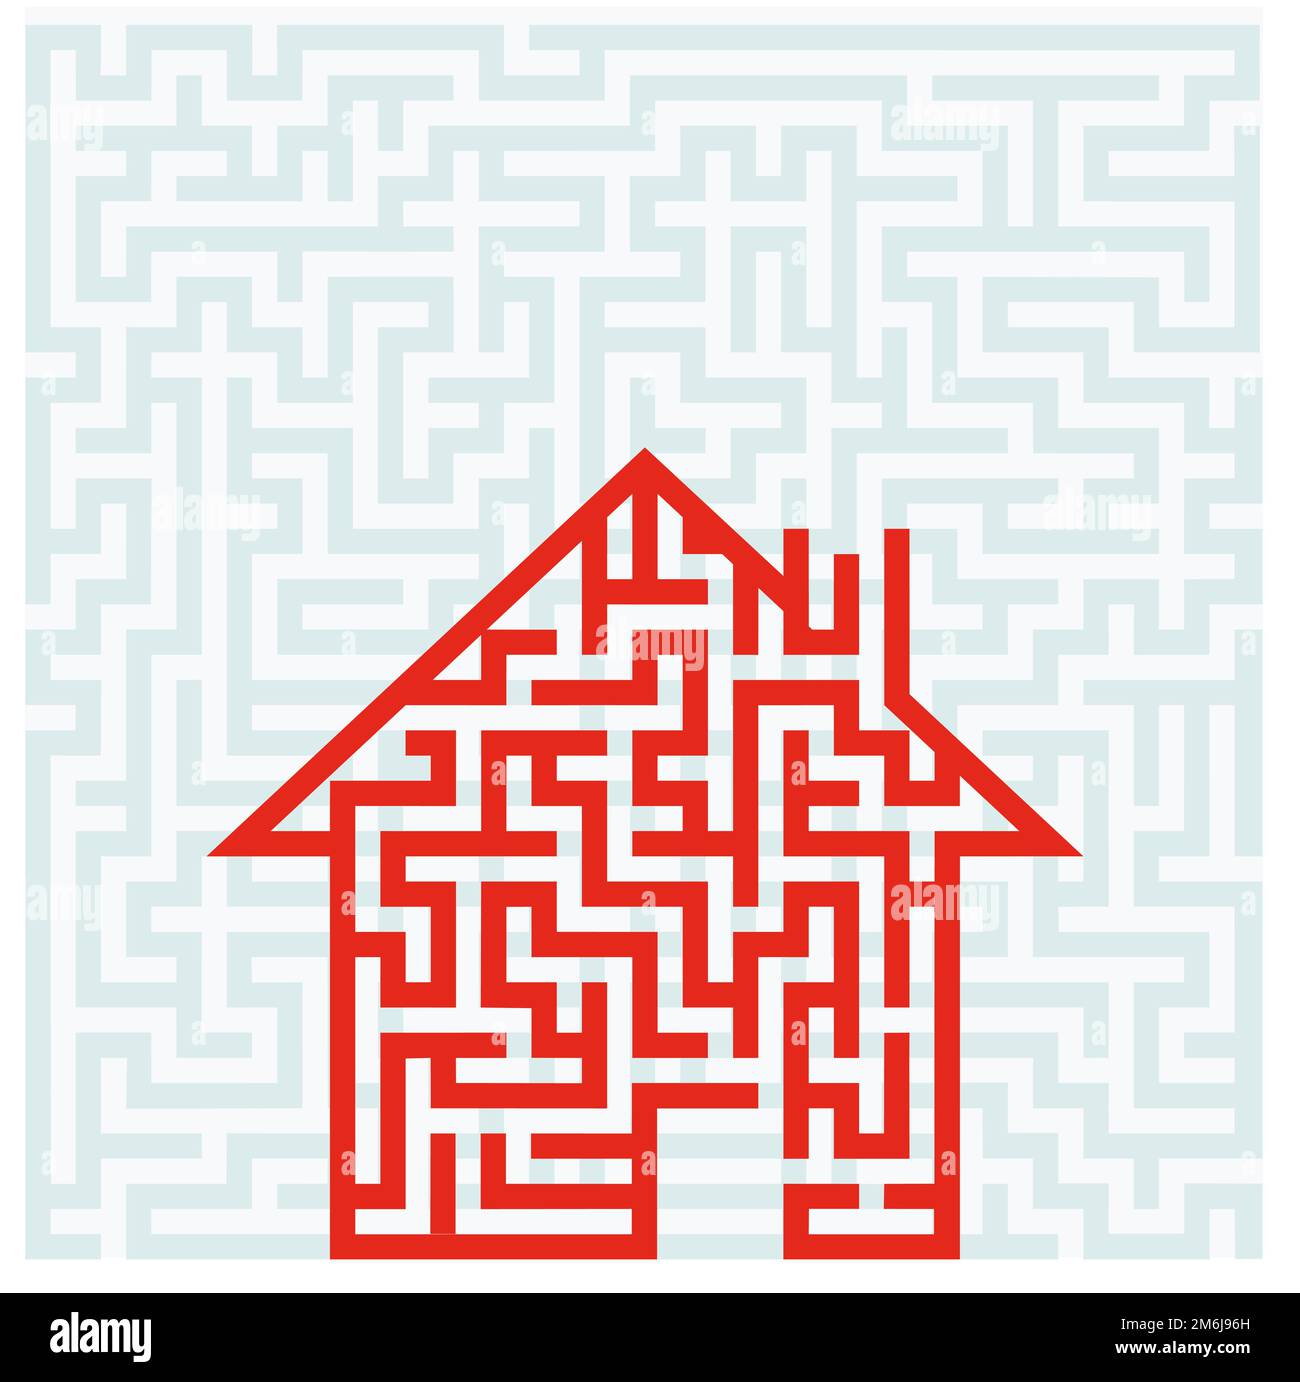 Buy house maze, concept illustration Stock Photo